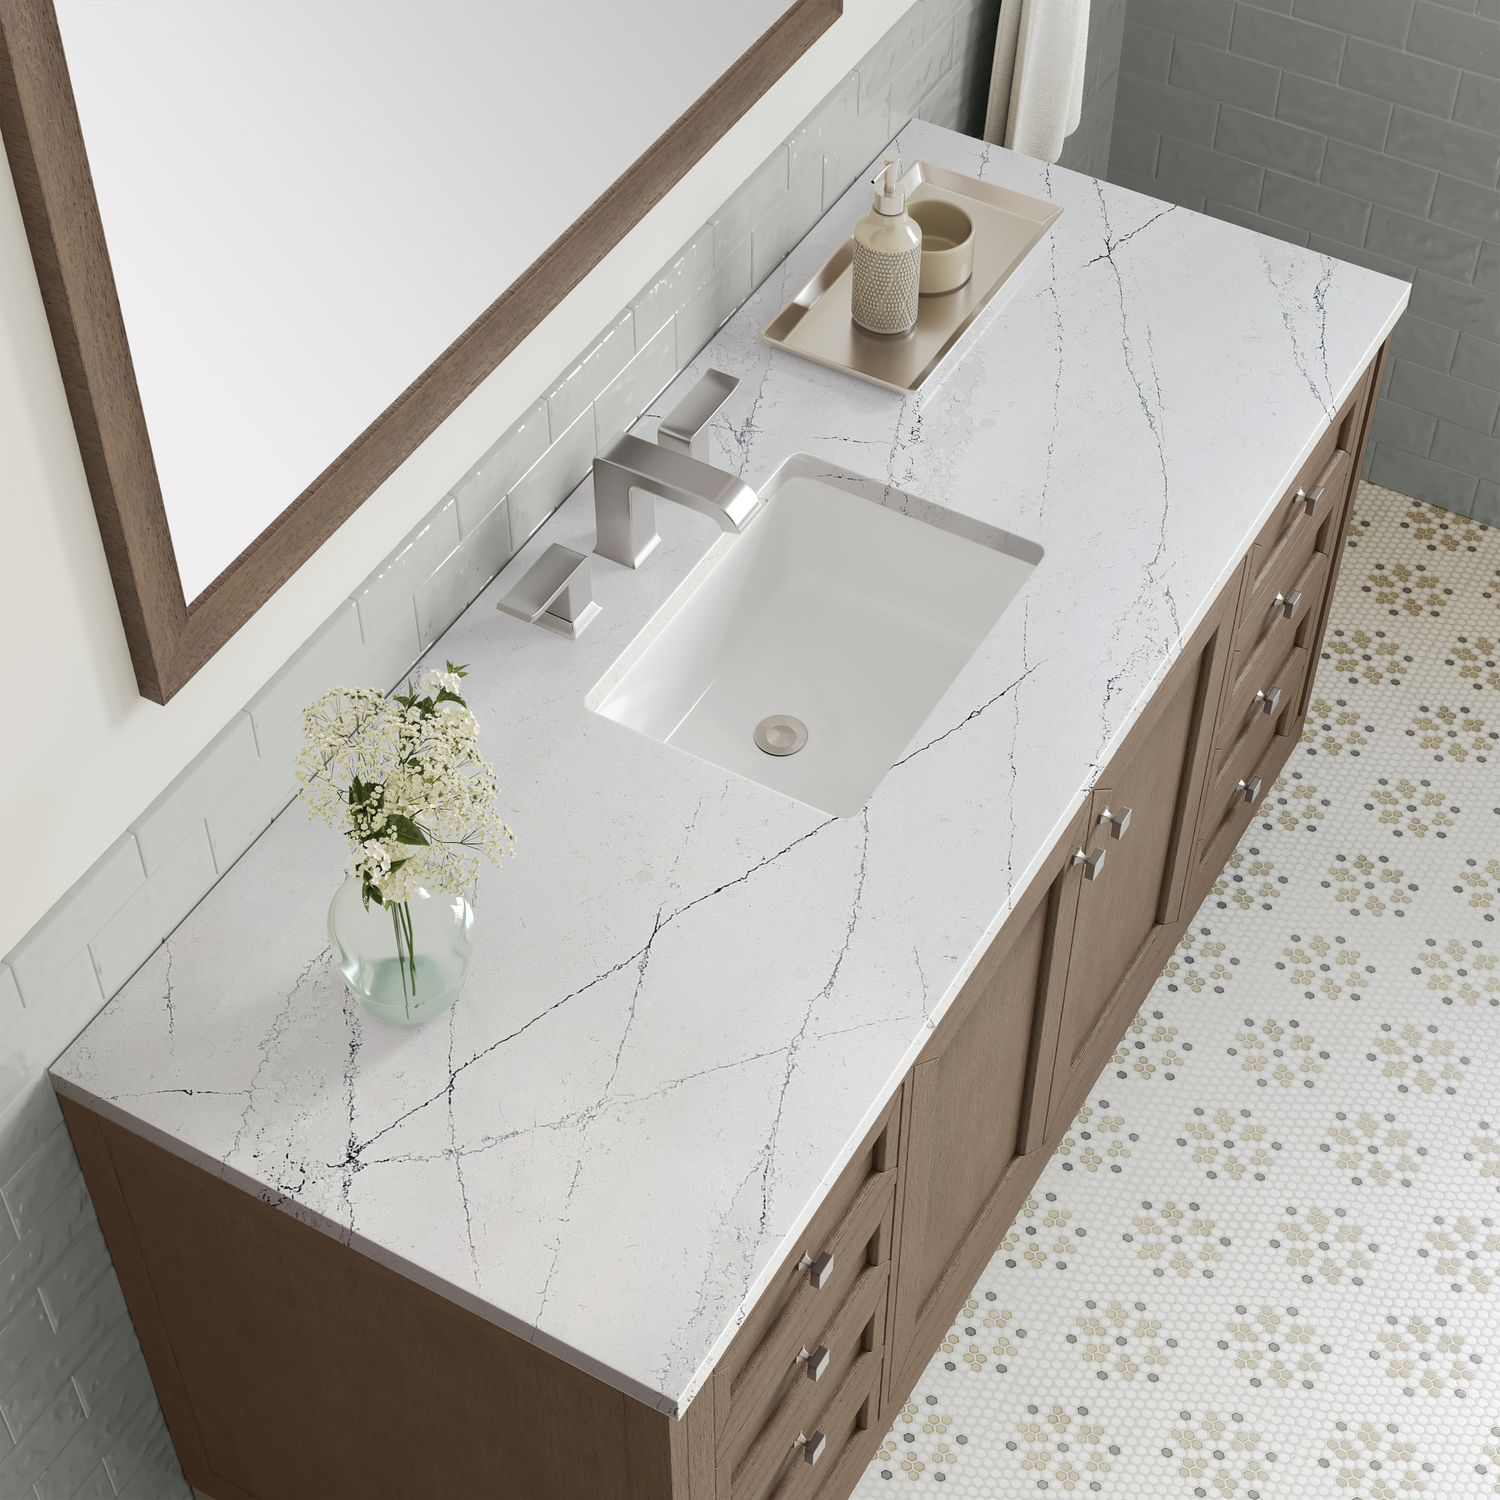 new bathroom cabinets James Martin Vanity Whitewashed Walnut Contemporary/Modern, Transitional